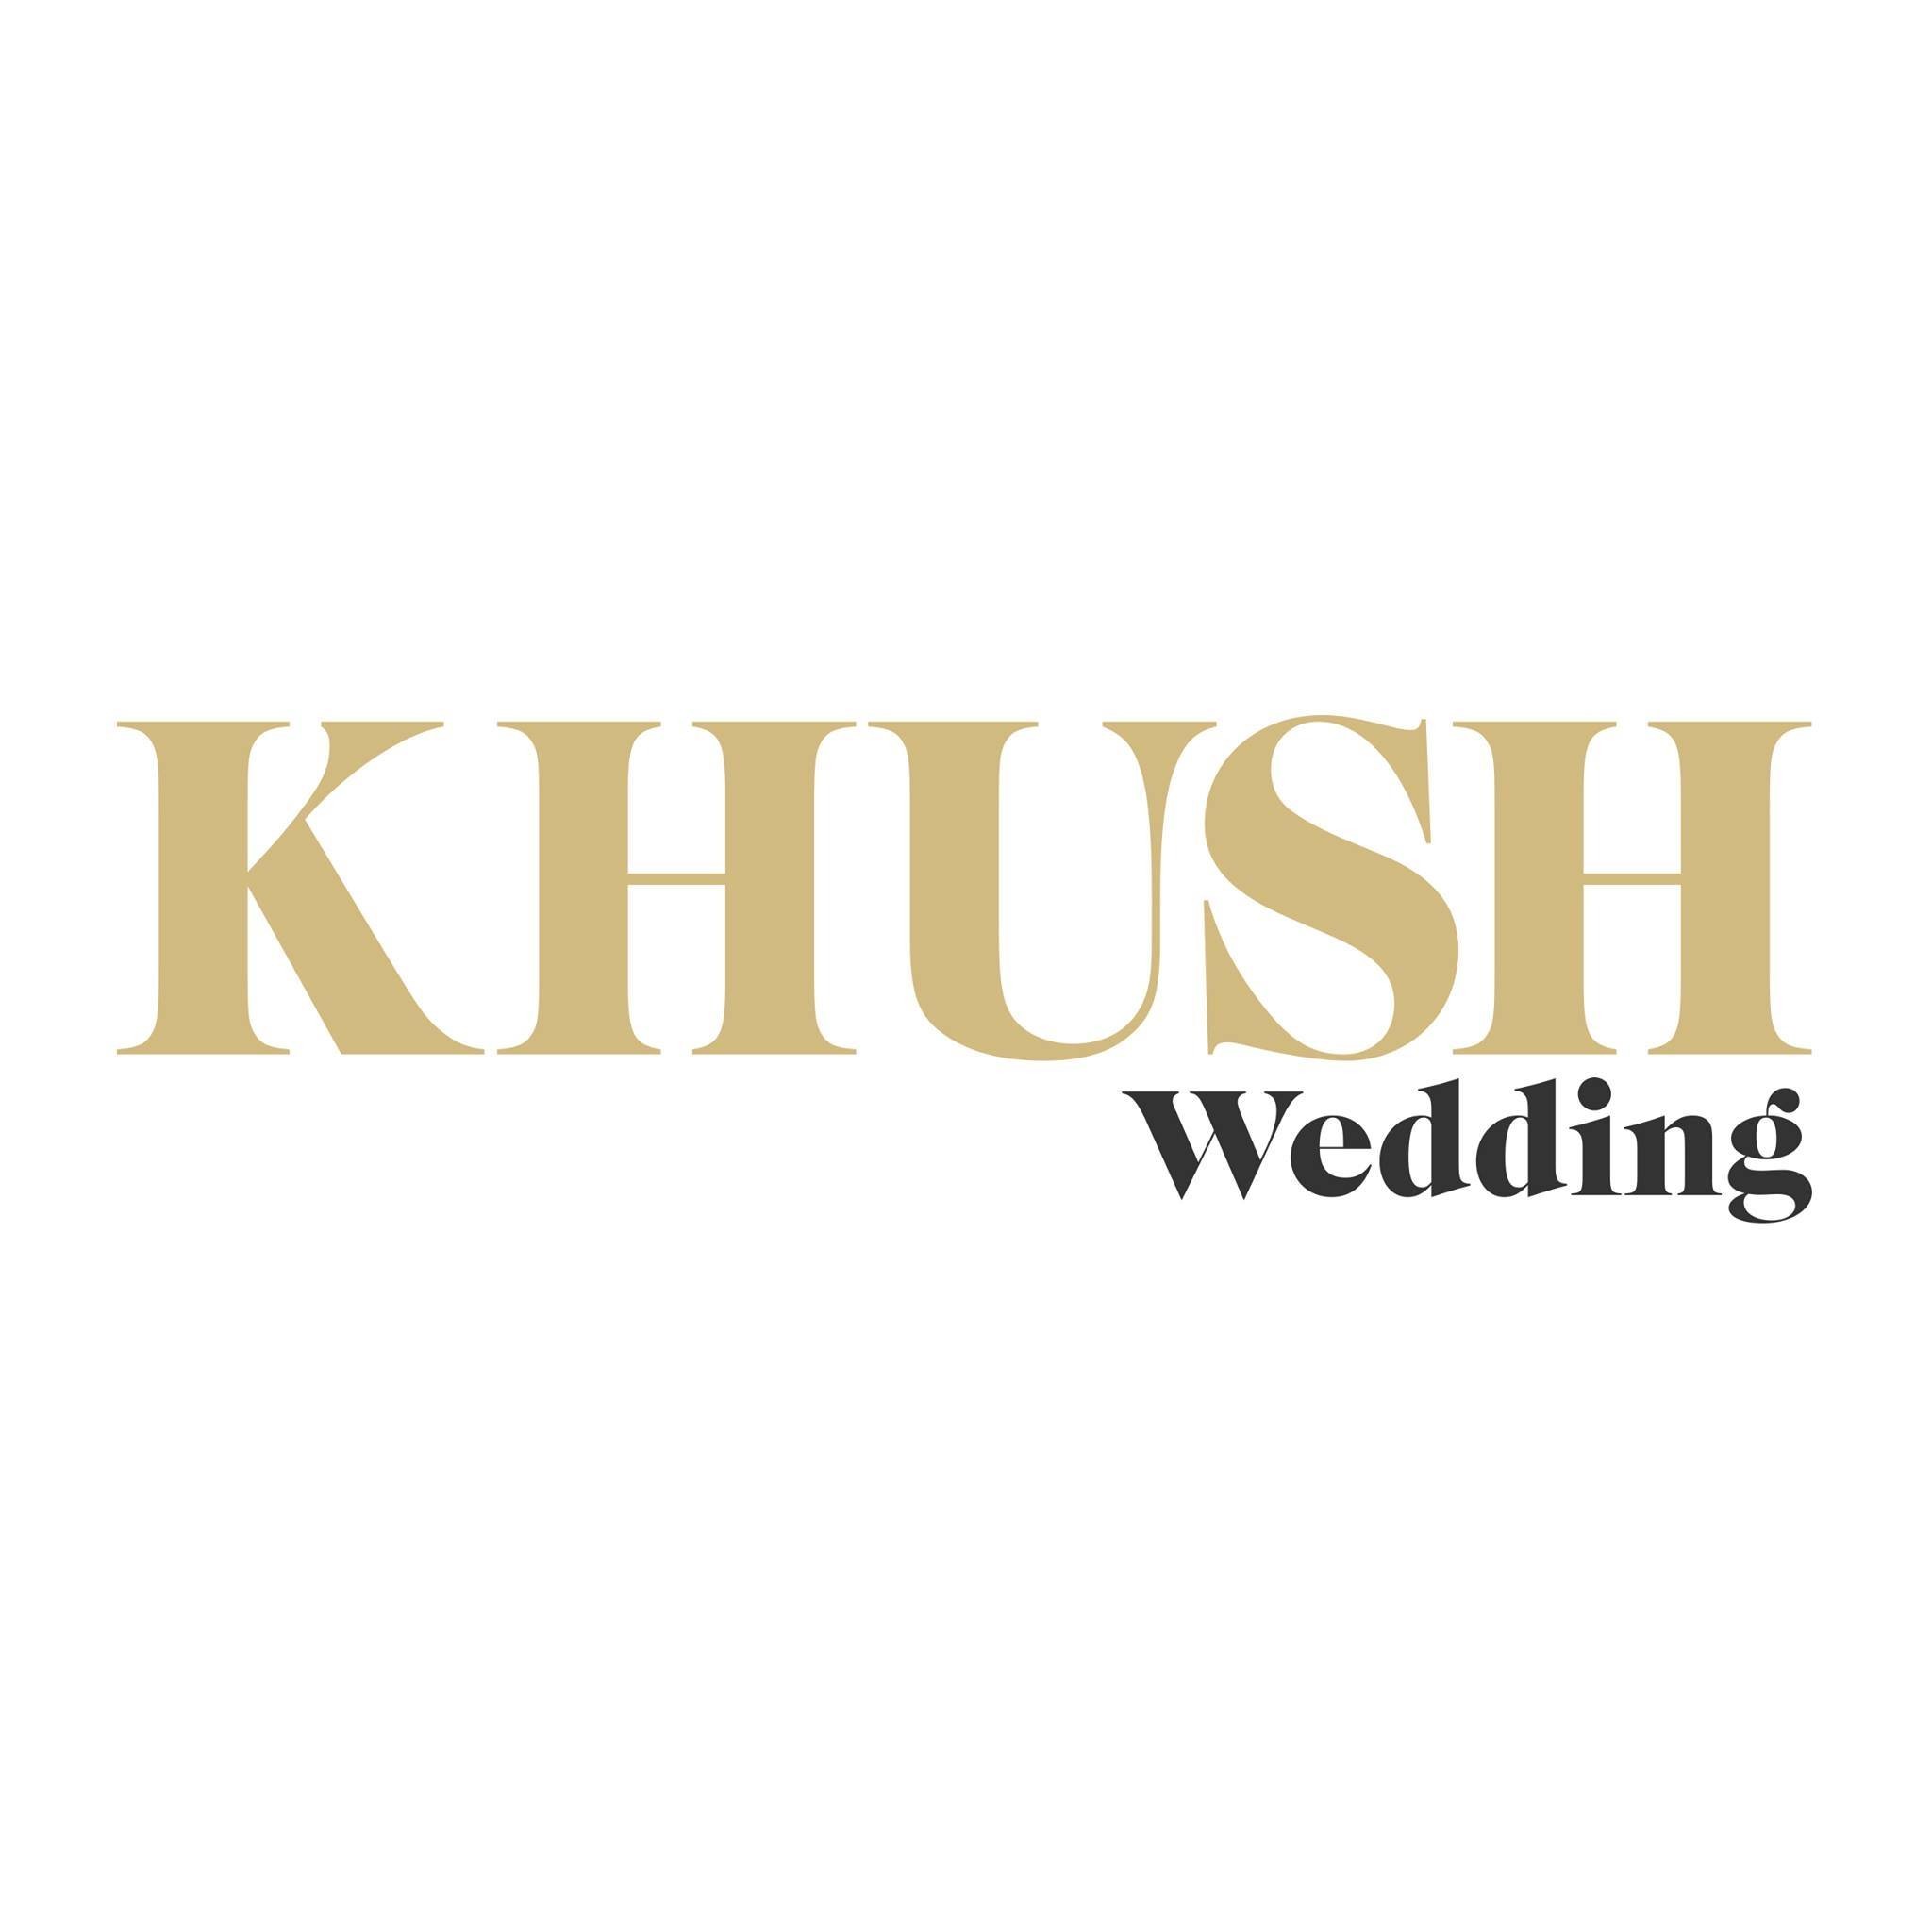 khush wedding